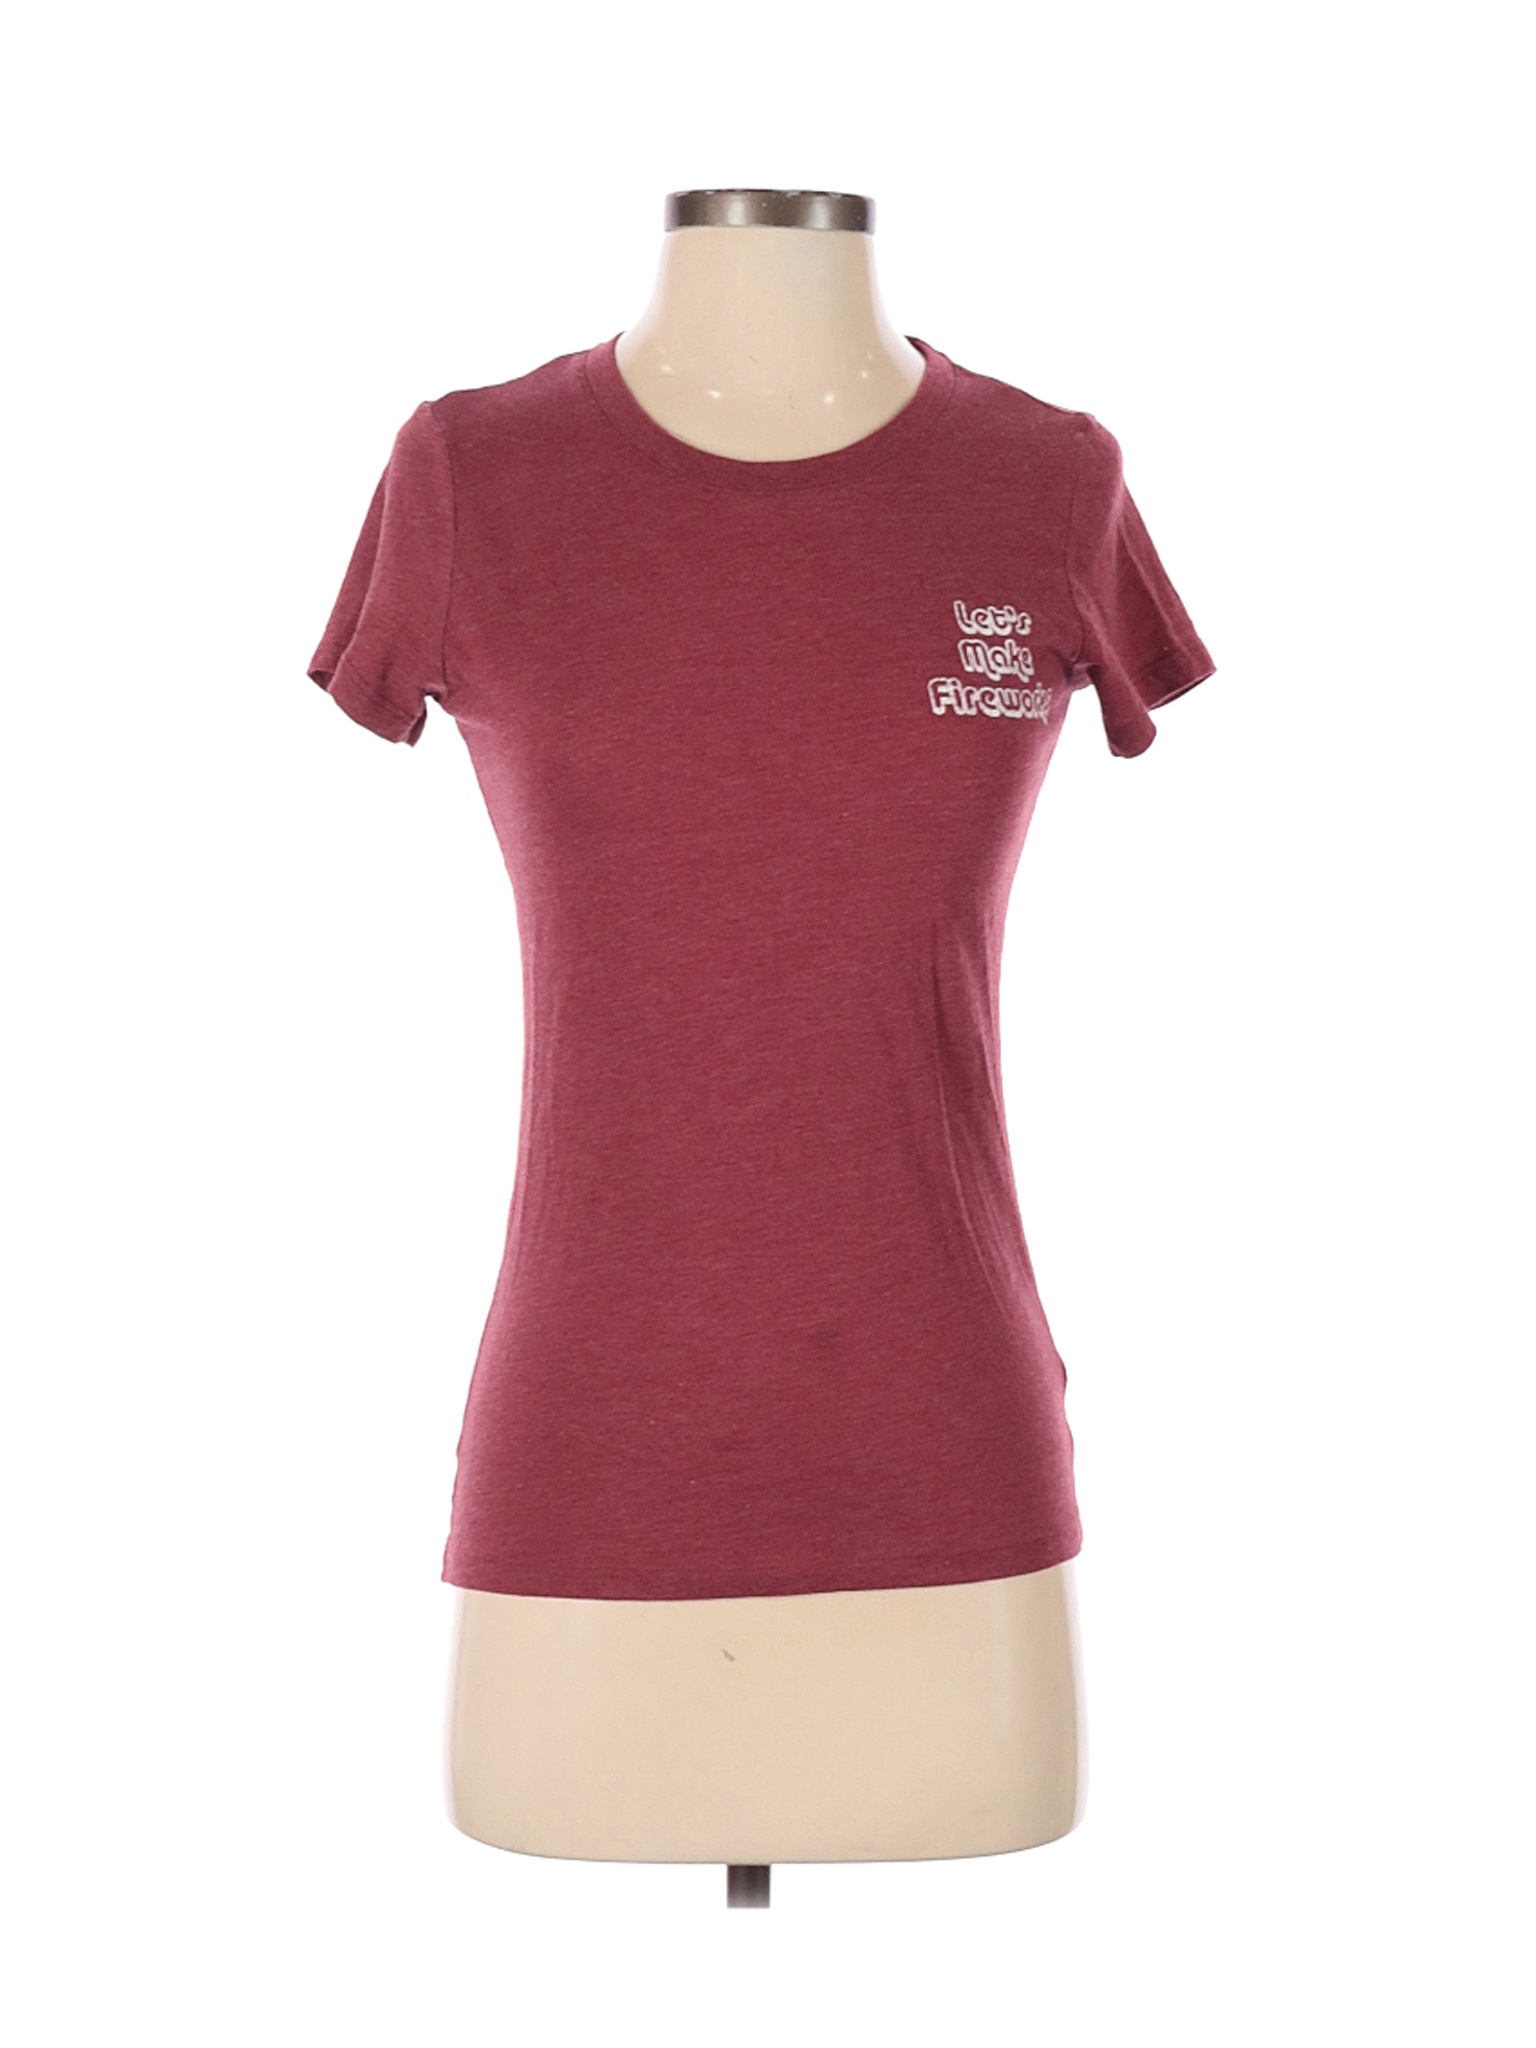 Aeropostale Women Red Short Sleeve T-Shirt S | eBay